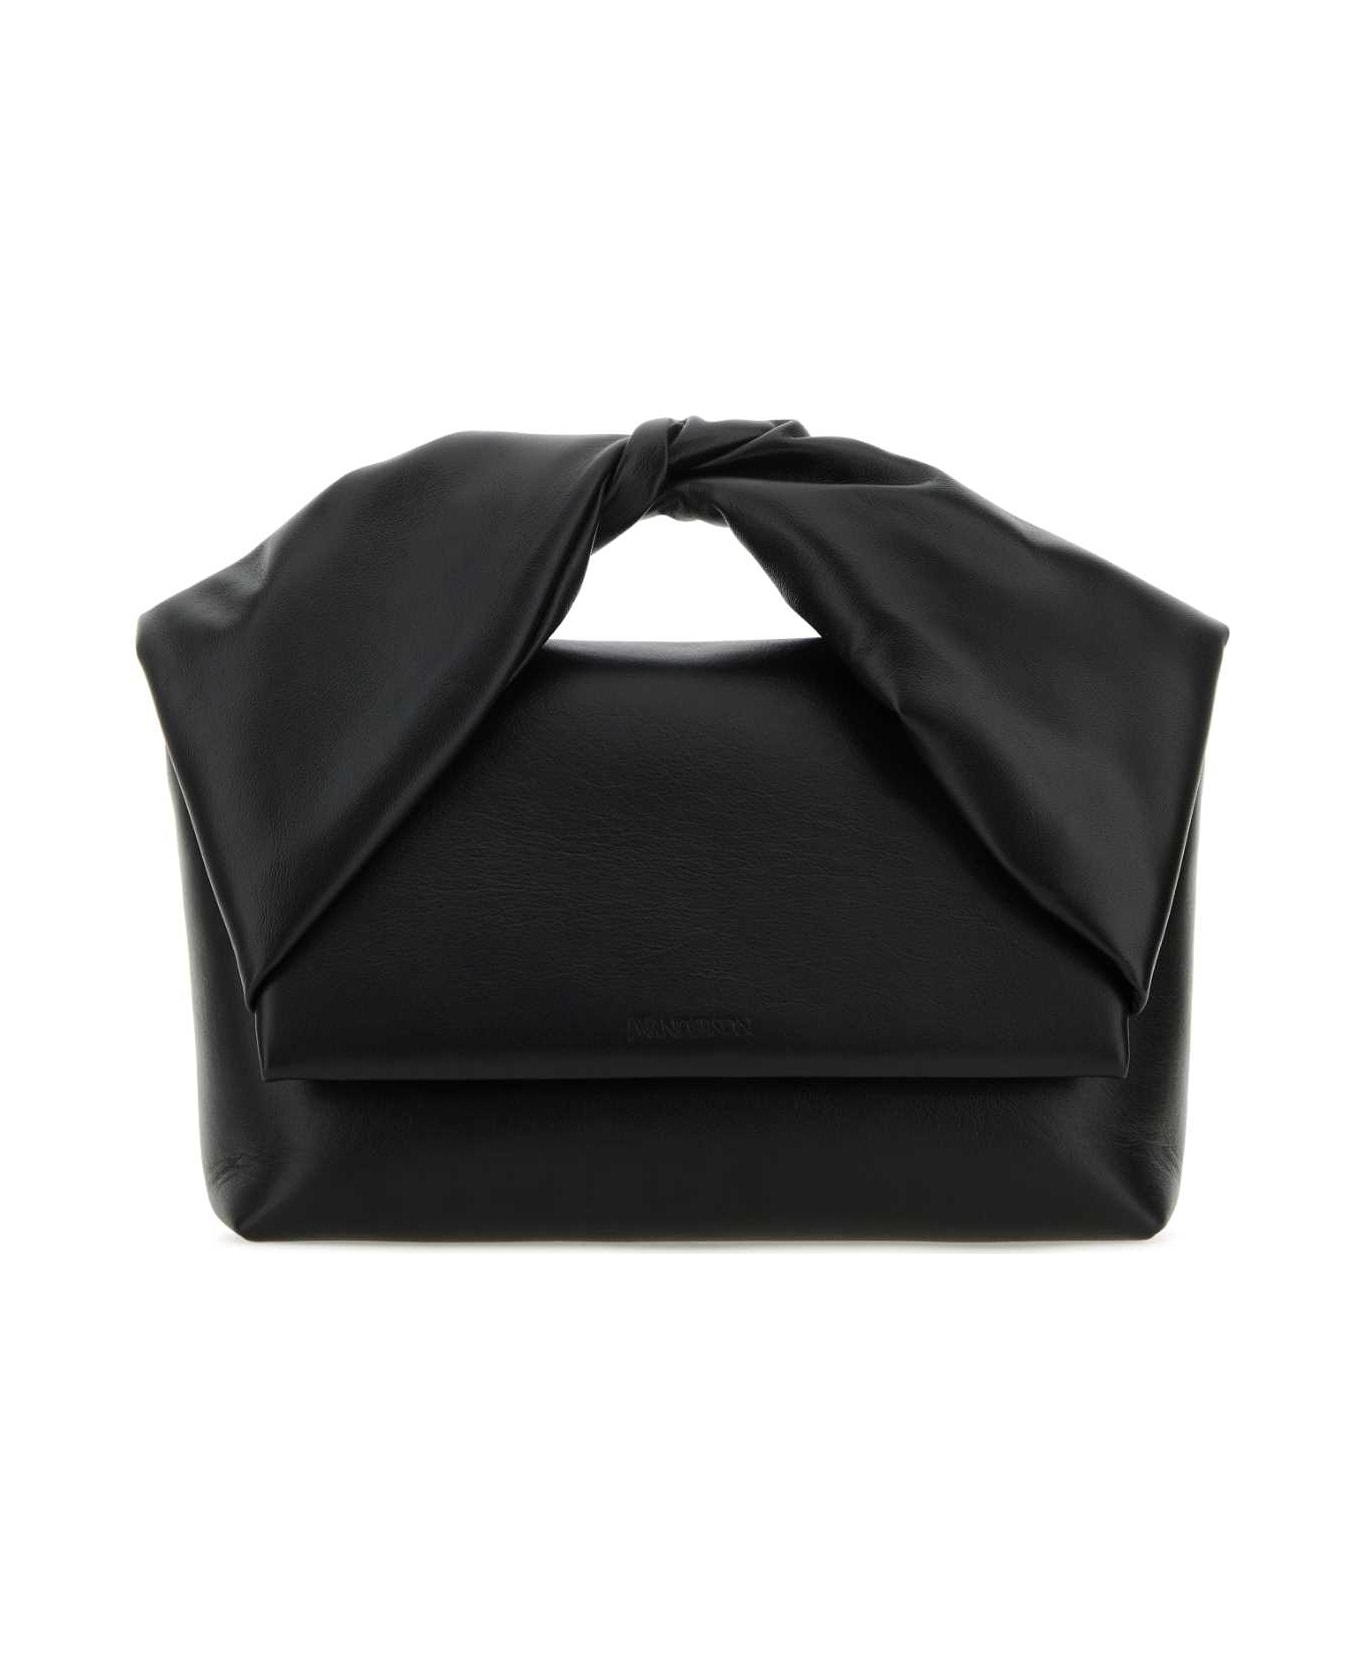 J.W. Anderson Black Leather Bag - Black トートバッグ